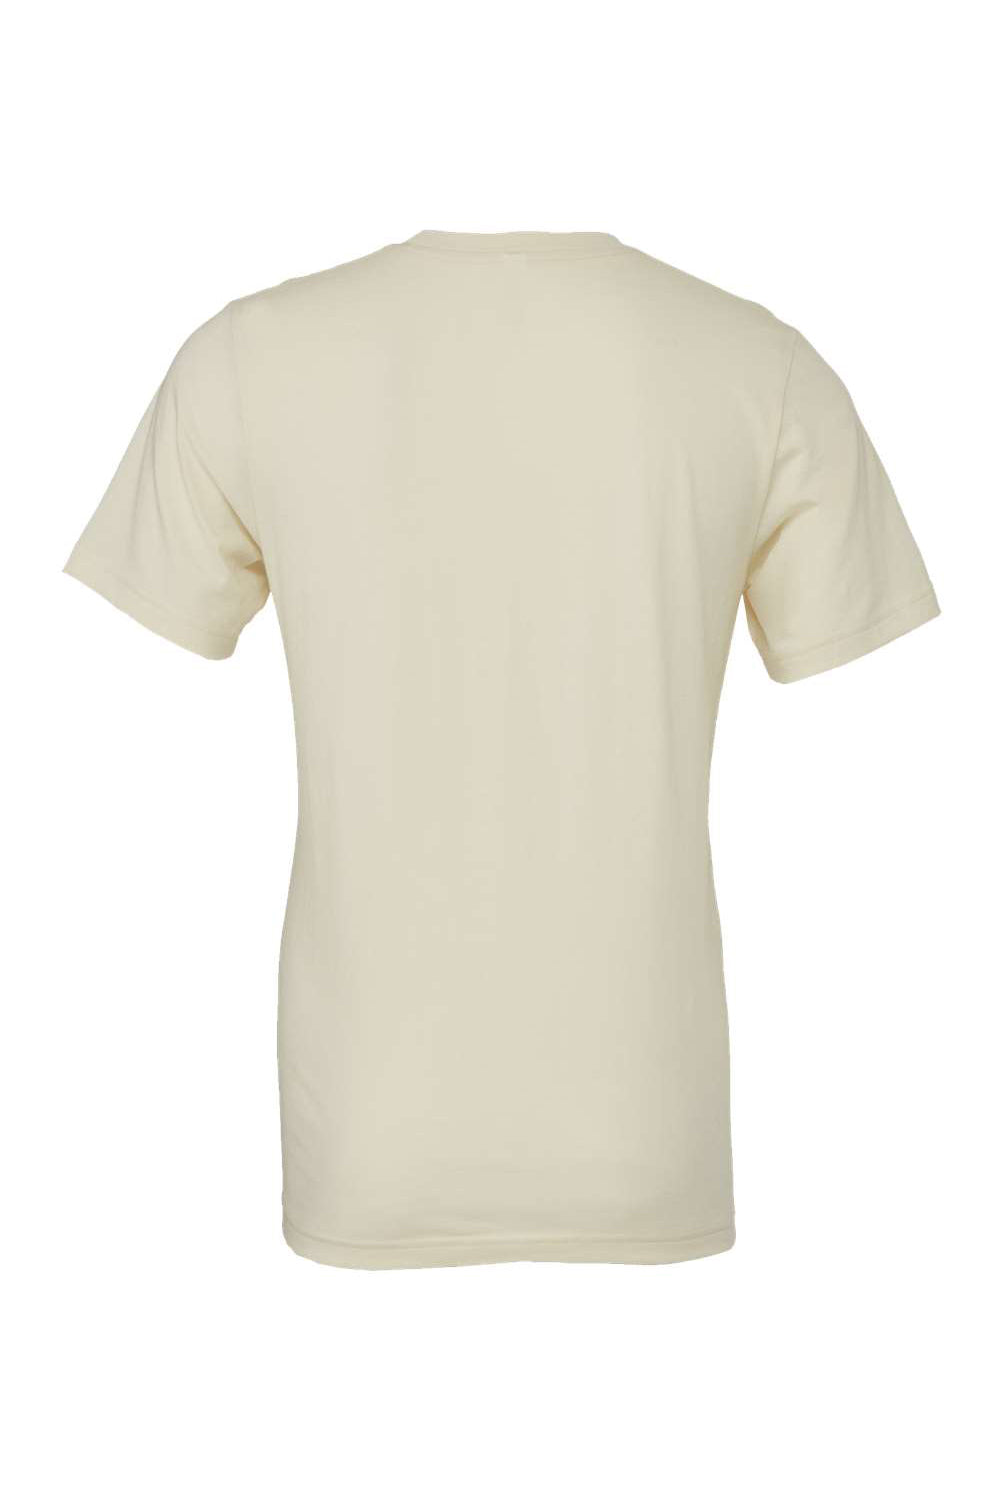 Bella + Canvas BC3001/3001C Mens Jersey Short Sleeve Crewneck T-Shirt Natural Flat Back